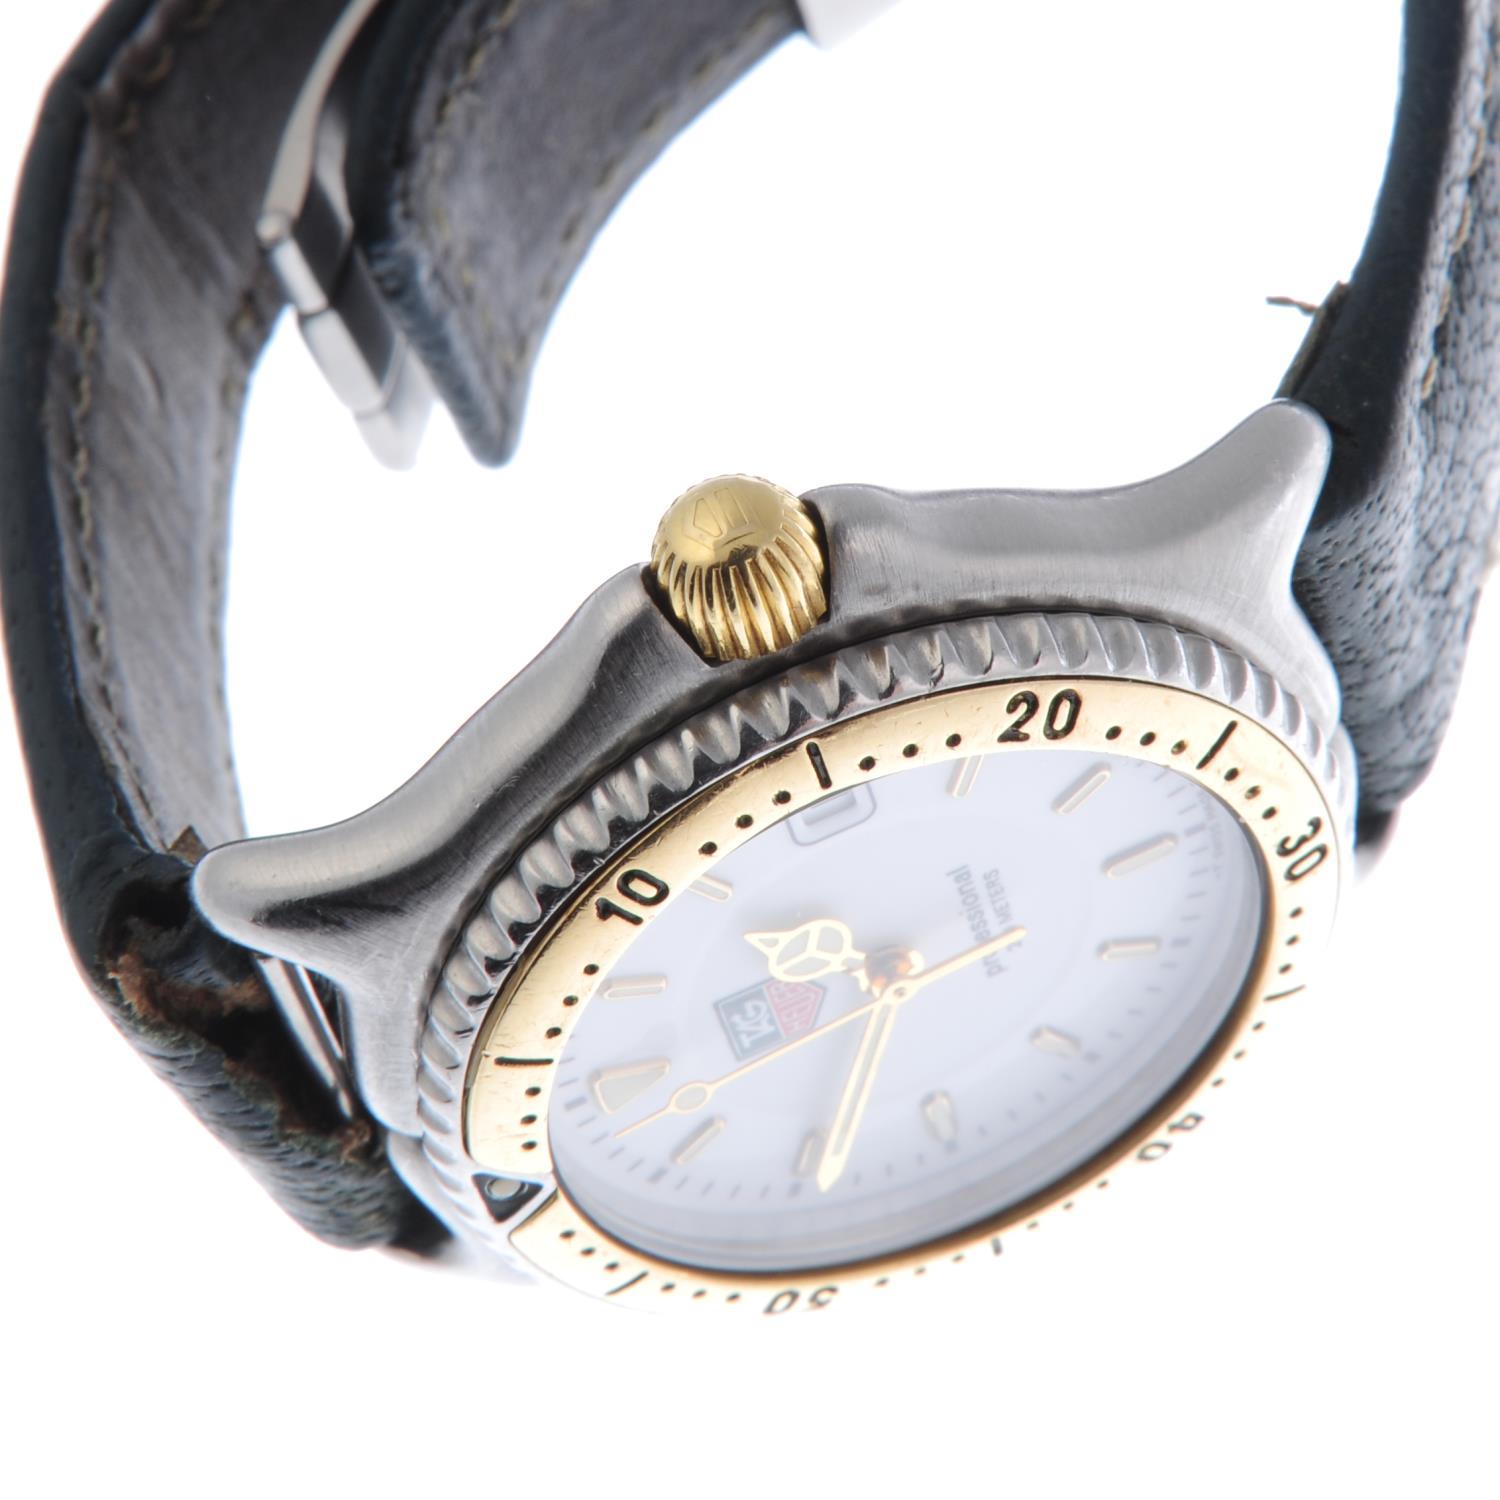 TAG HEUER - a gentleman's S/el wrist watch. - Image 4 of 4